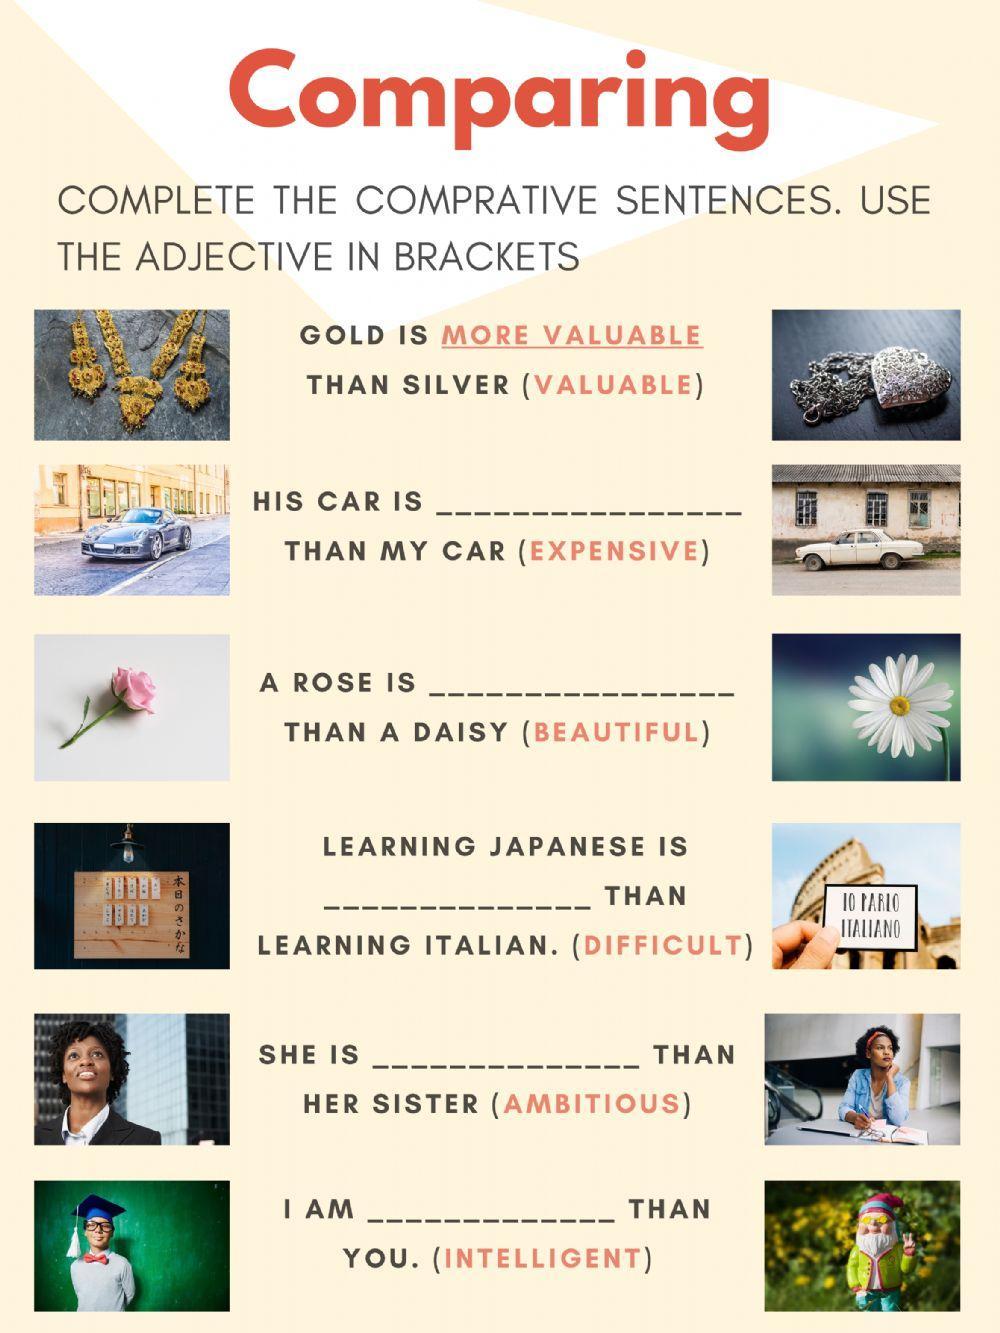 Comparative Sentences